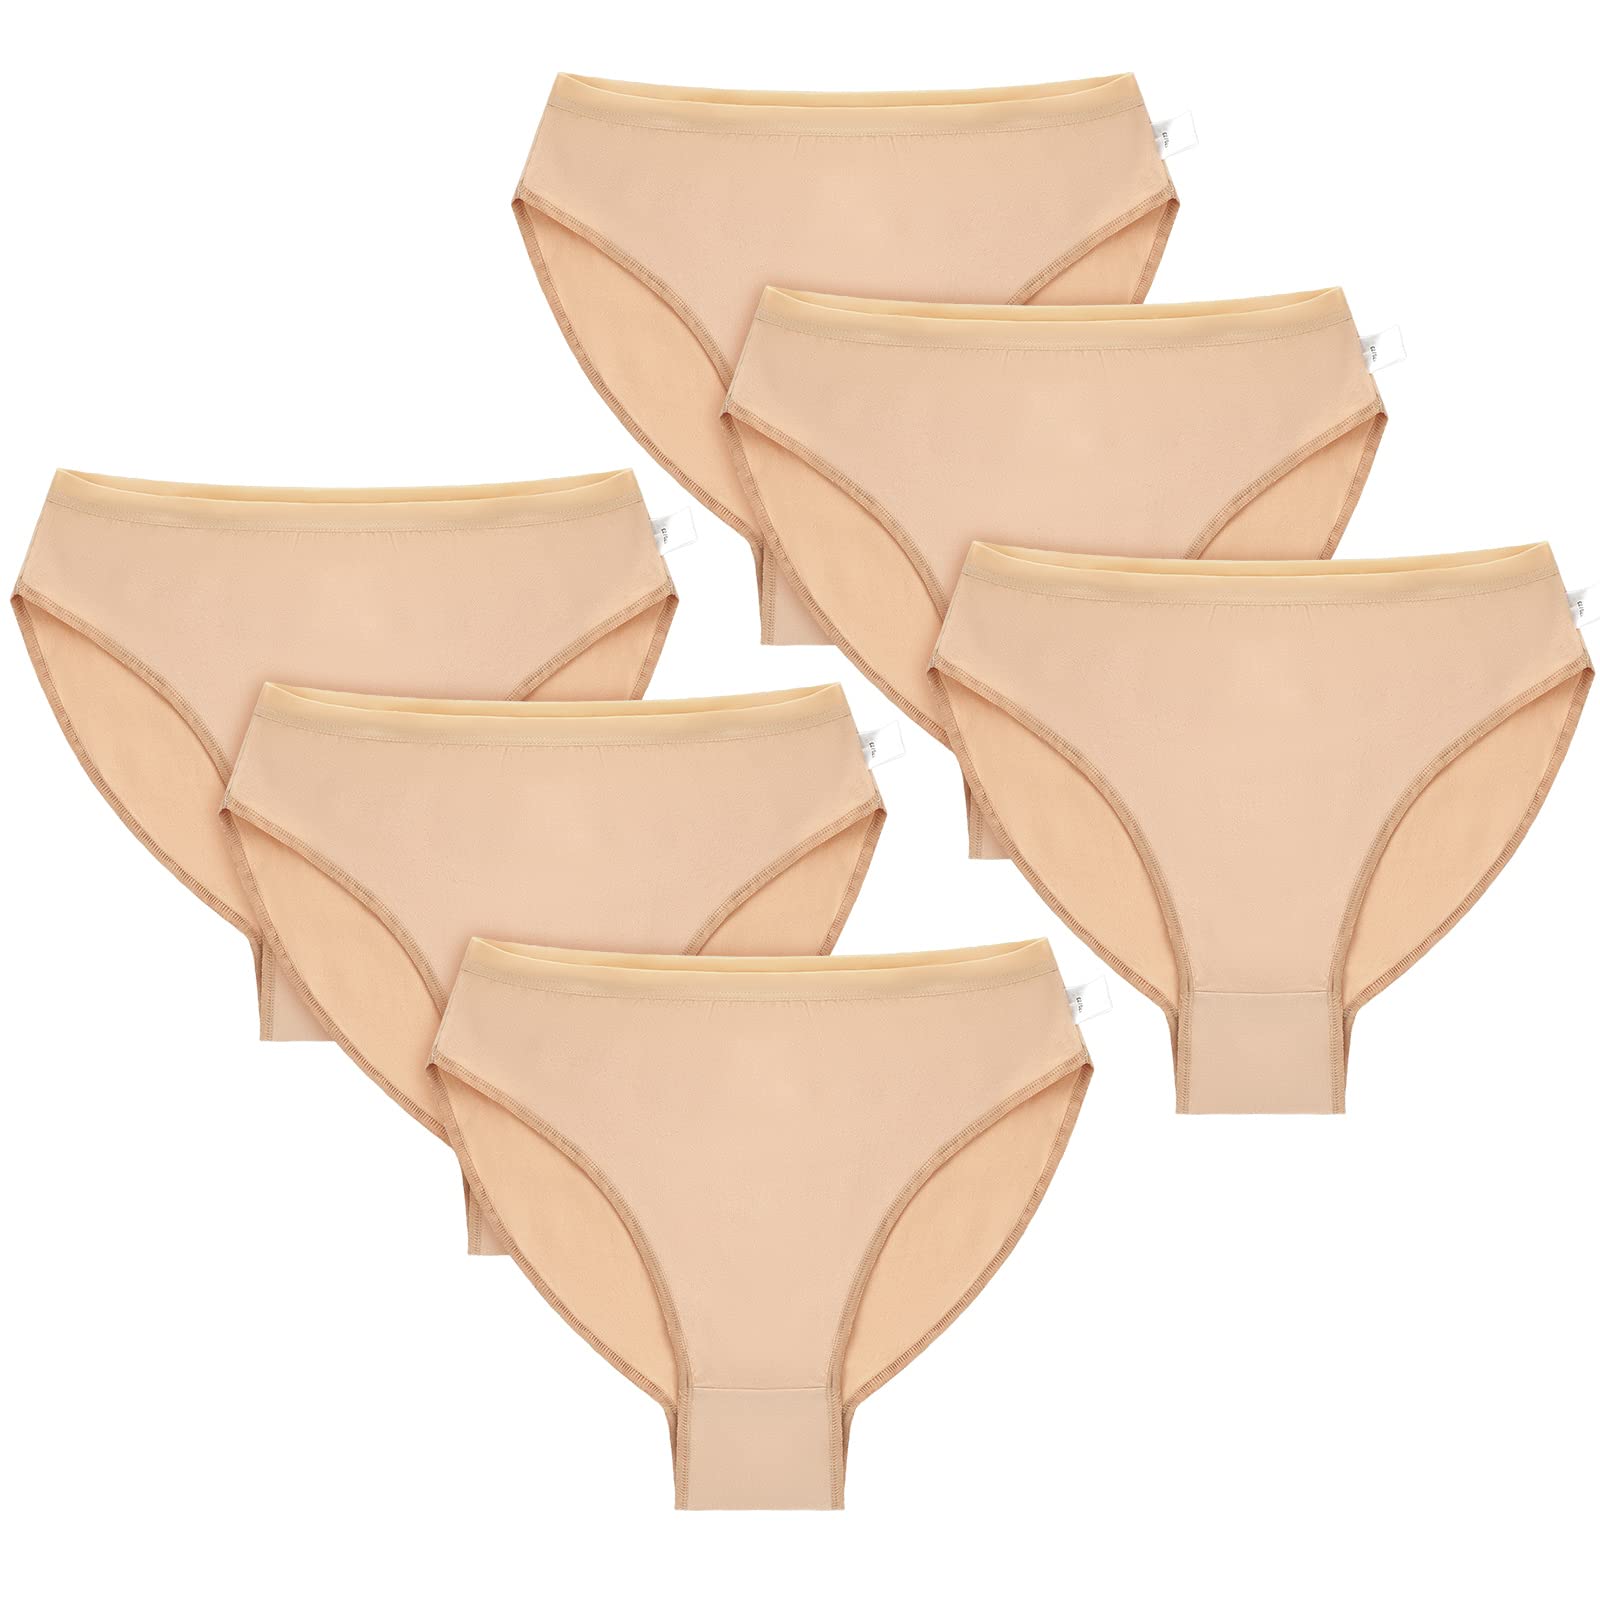 Ladies Cotton Panties - 6 Pieces